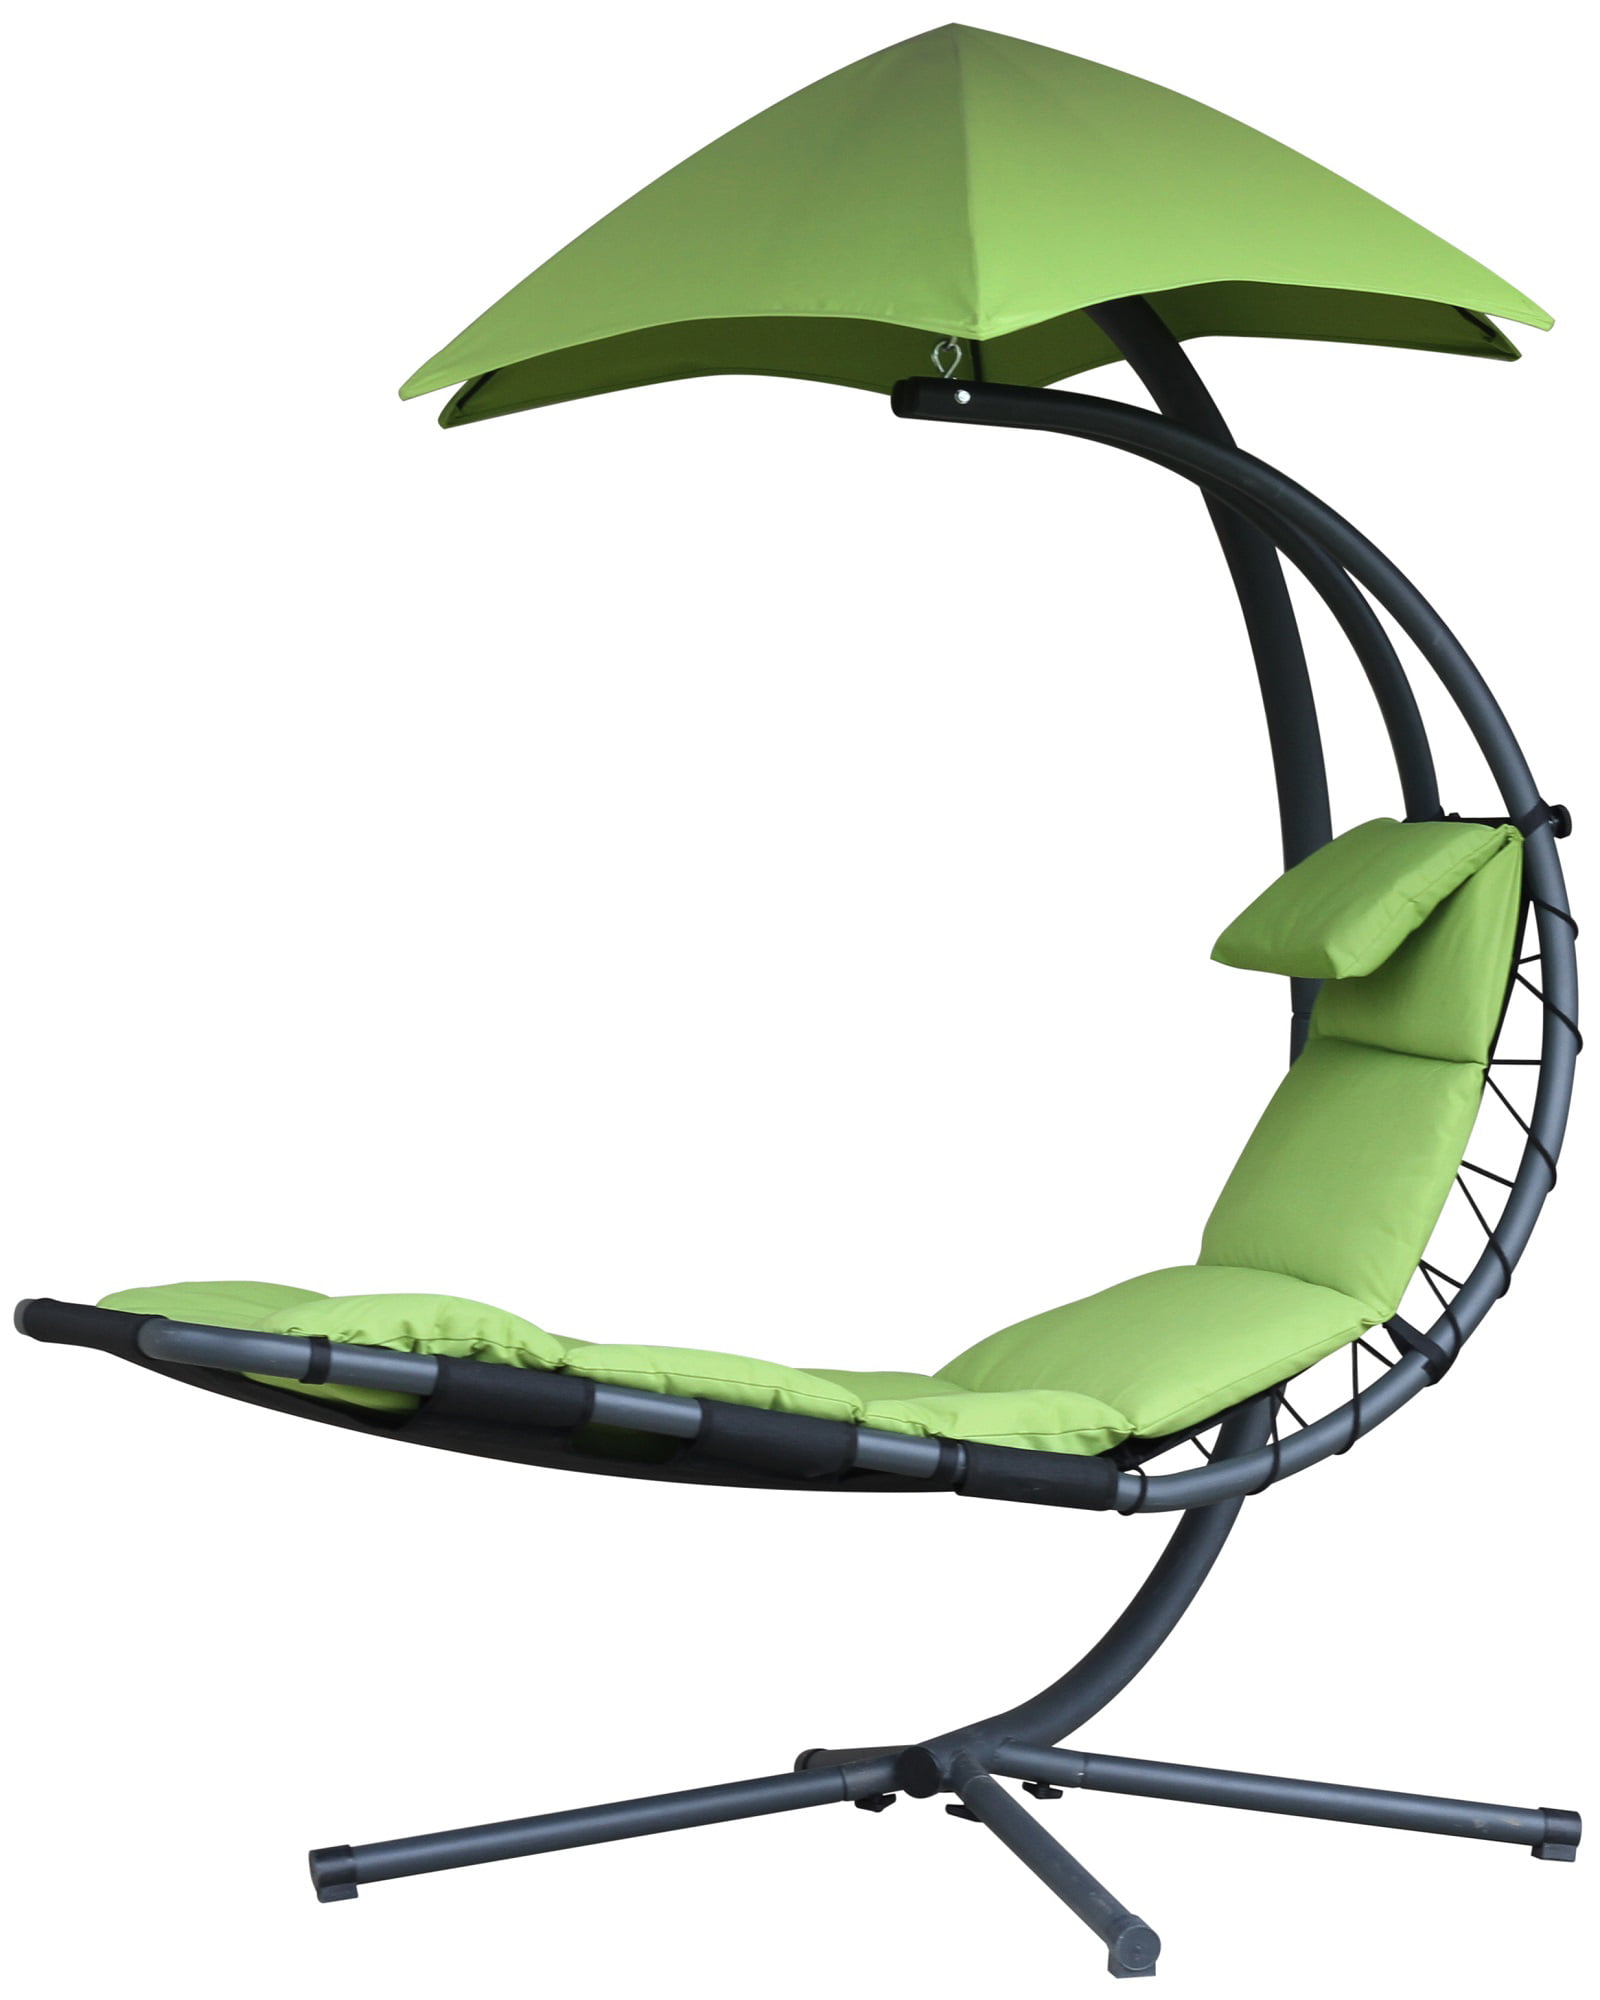 84” Green Outdoor Lounge Chair with an Overhanging Umbrella - Walmart.com